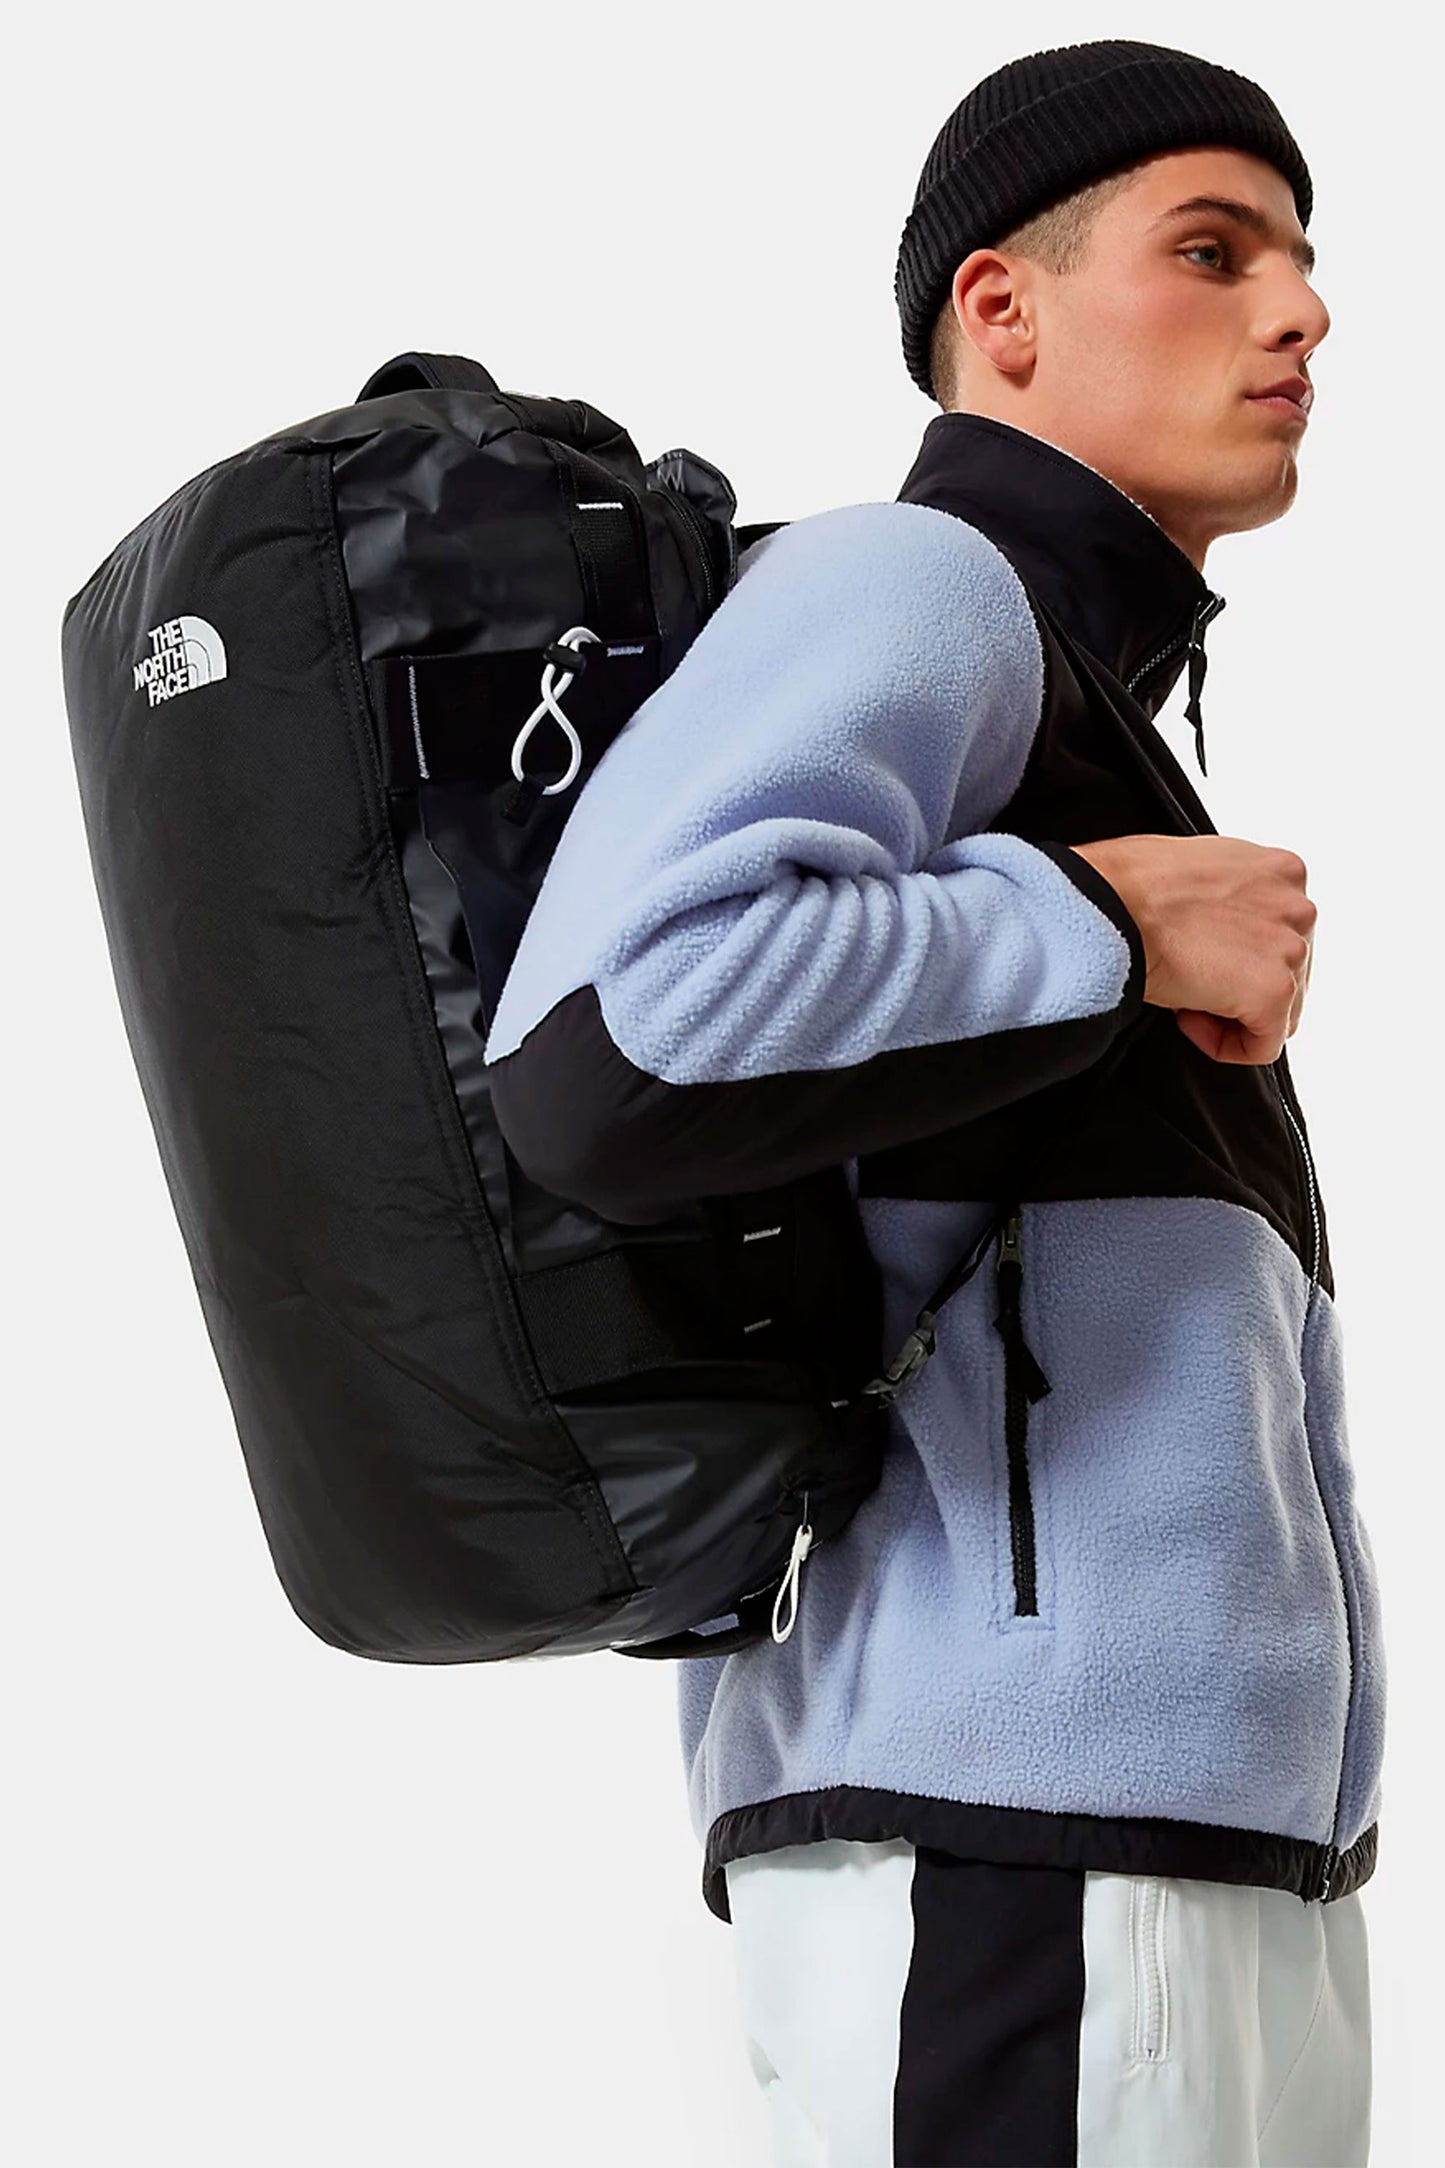 
                  
                    Pukas-Surf-Shop-The-North-Face-backpack-base-camp-duffel-voyager-32l-black
                  
                